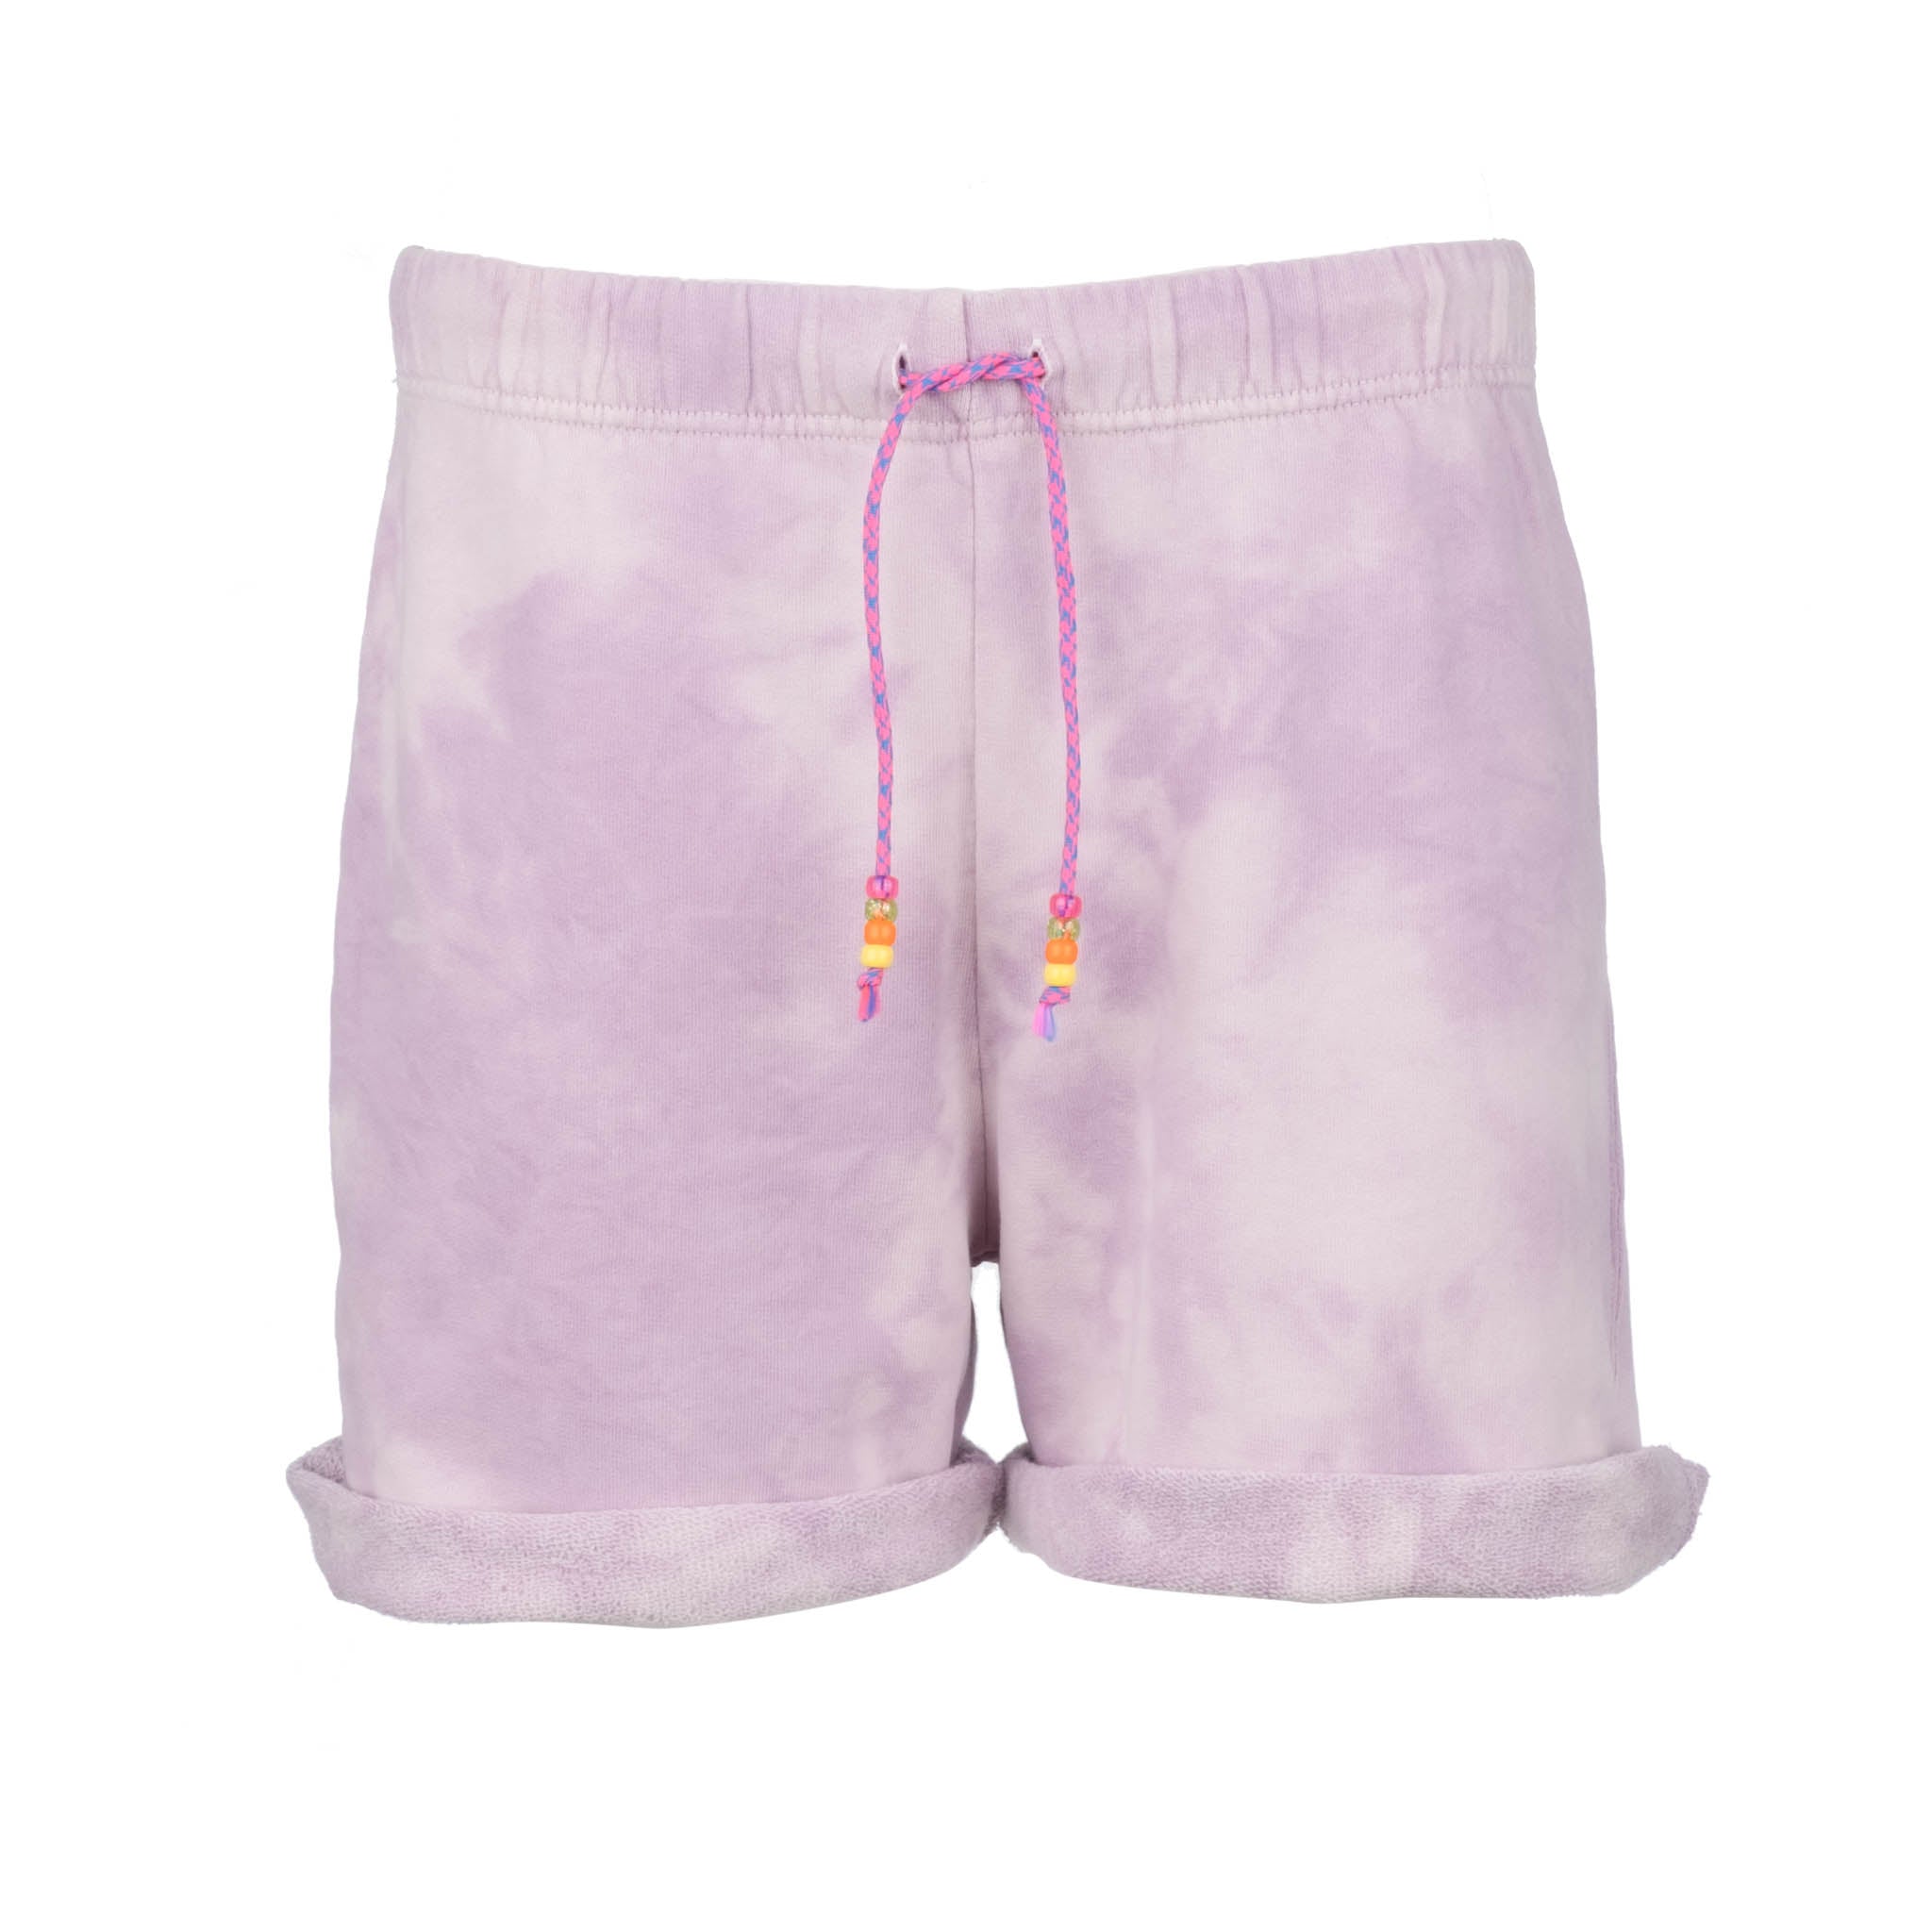 pink drawstring shorts